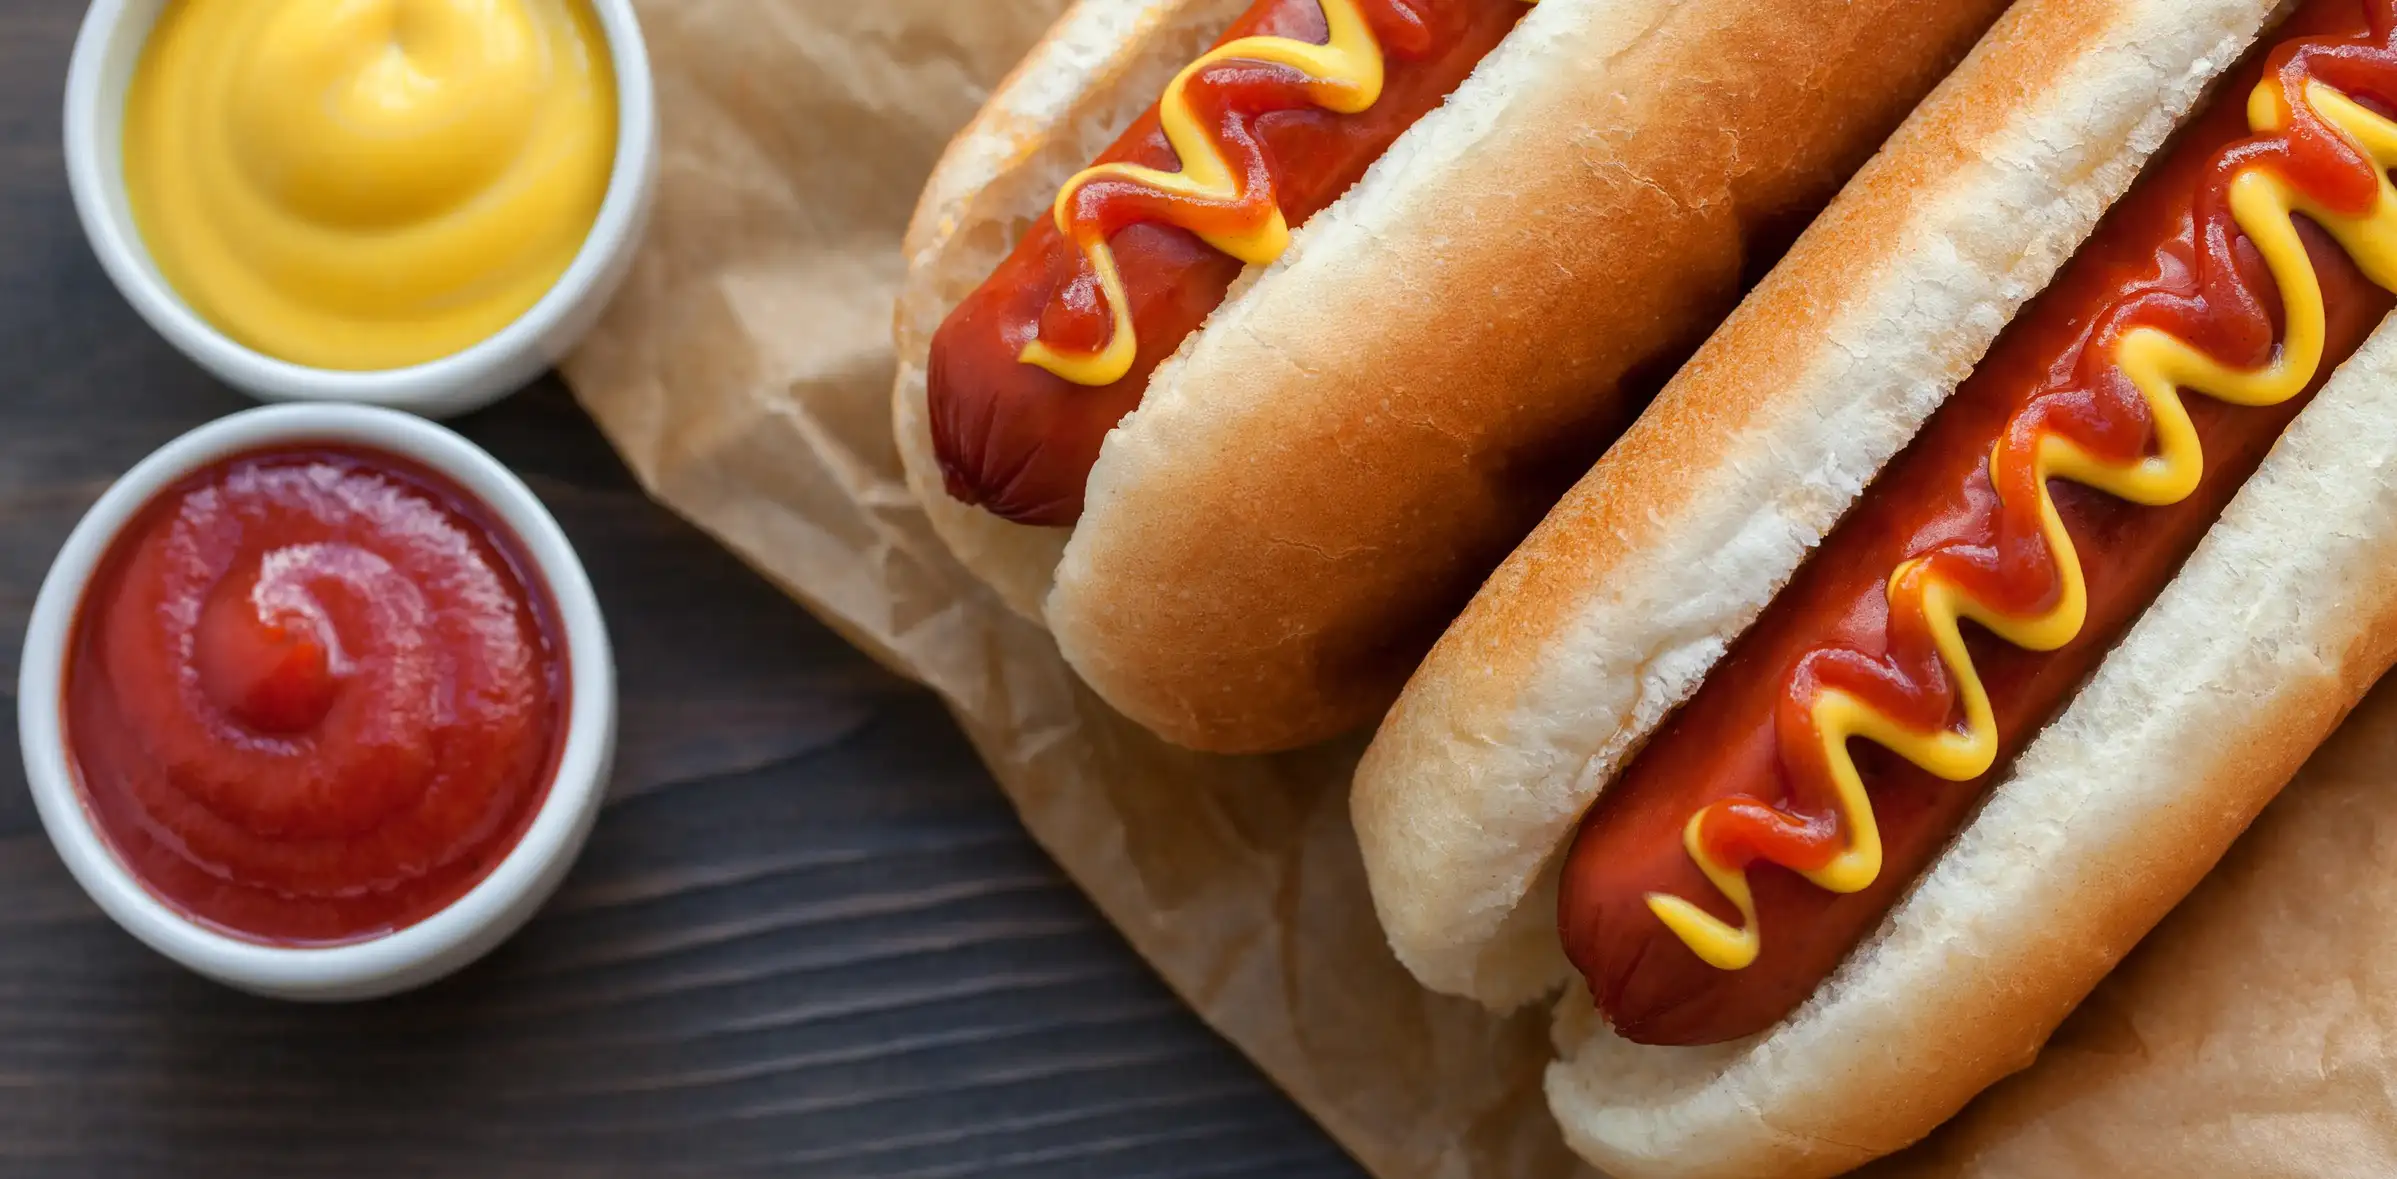 Hotdog Production and Supply